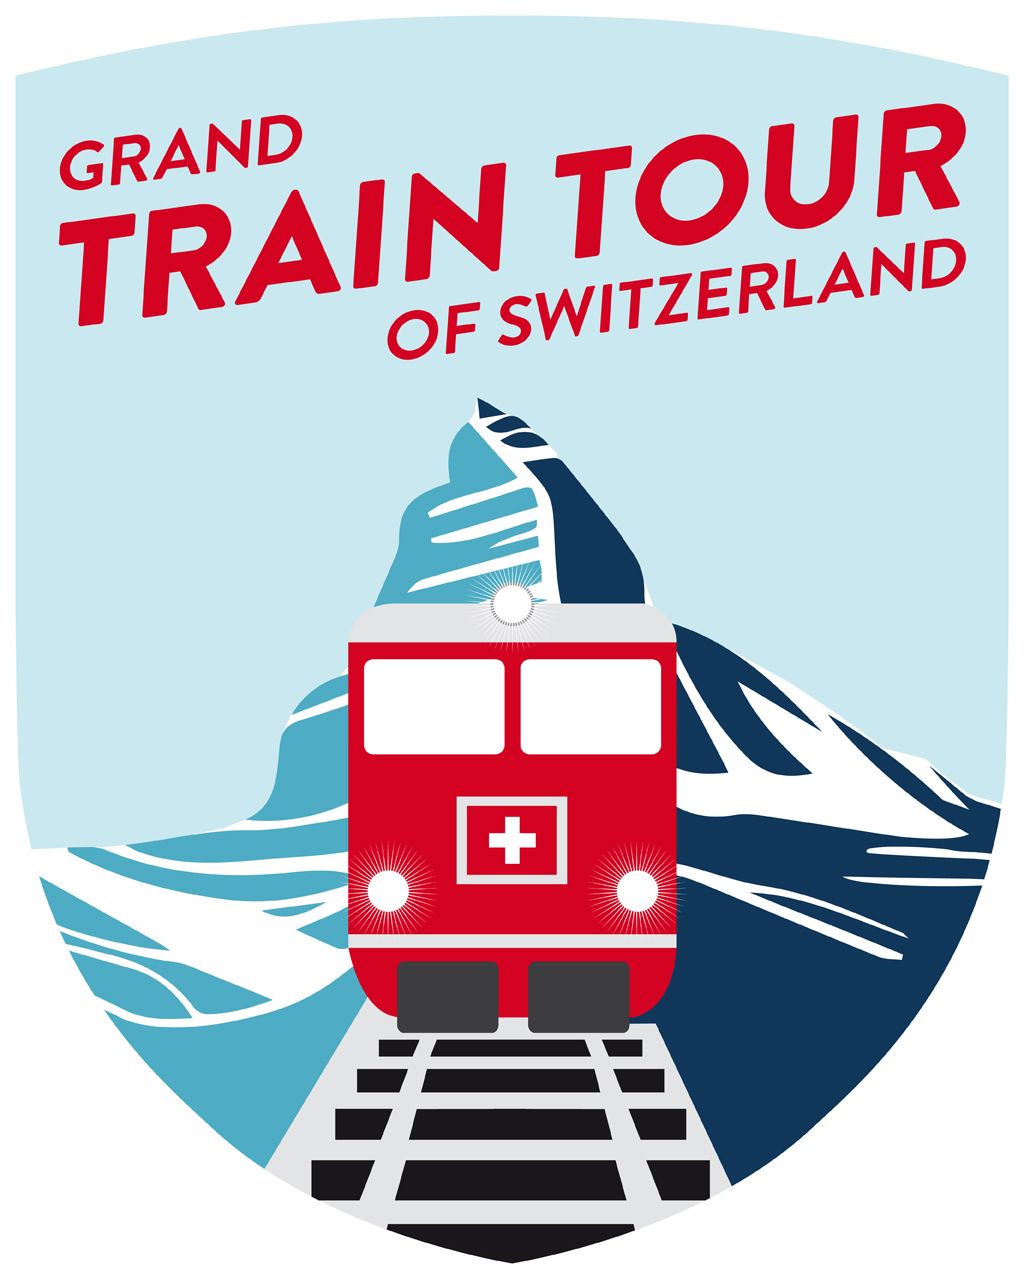 Grand Train Tour